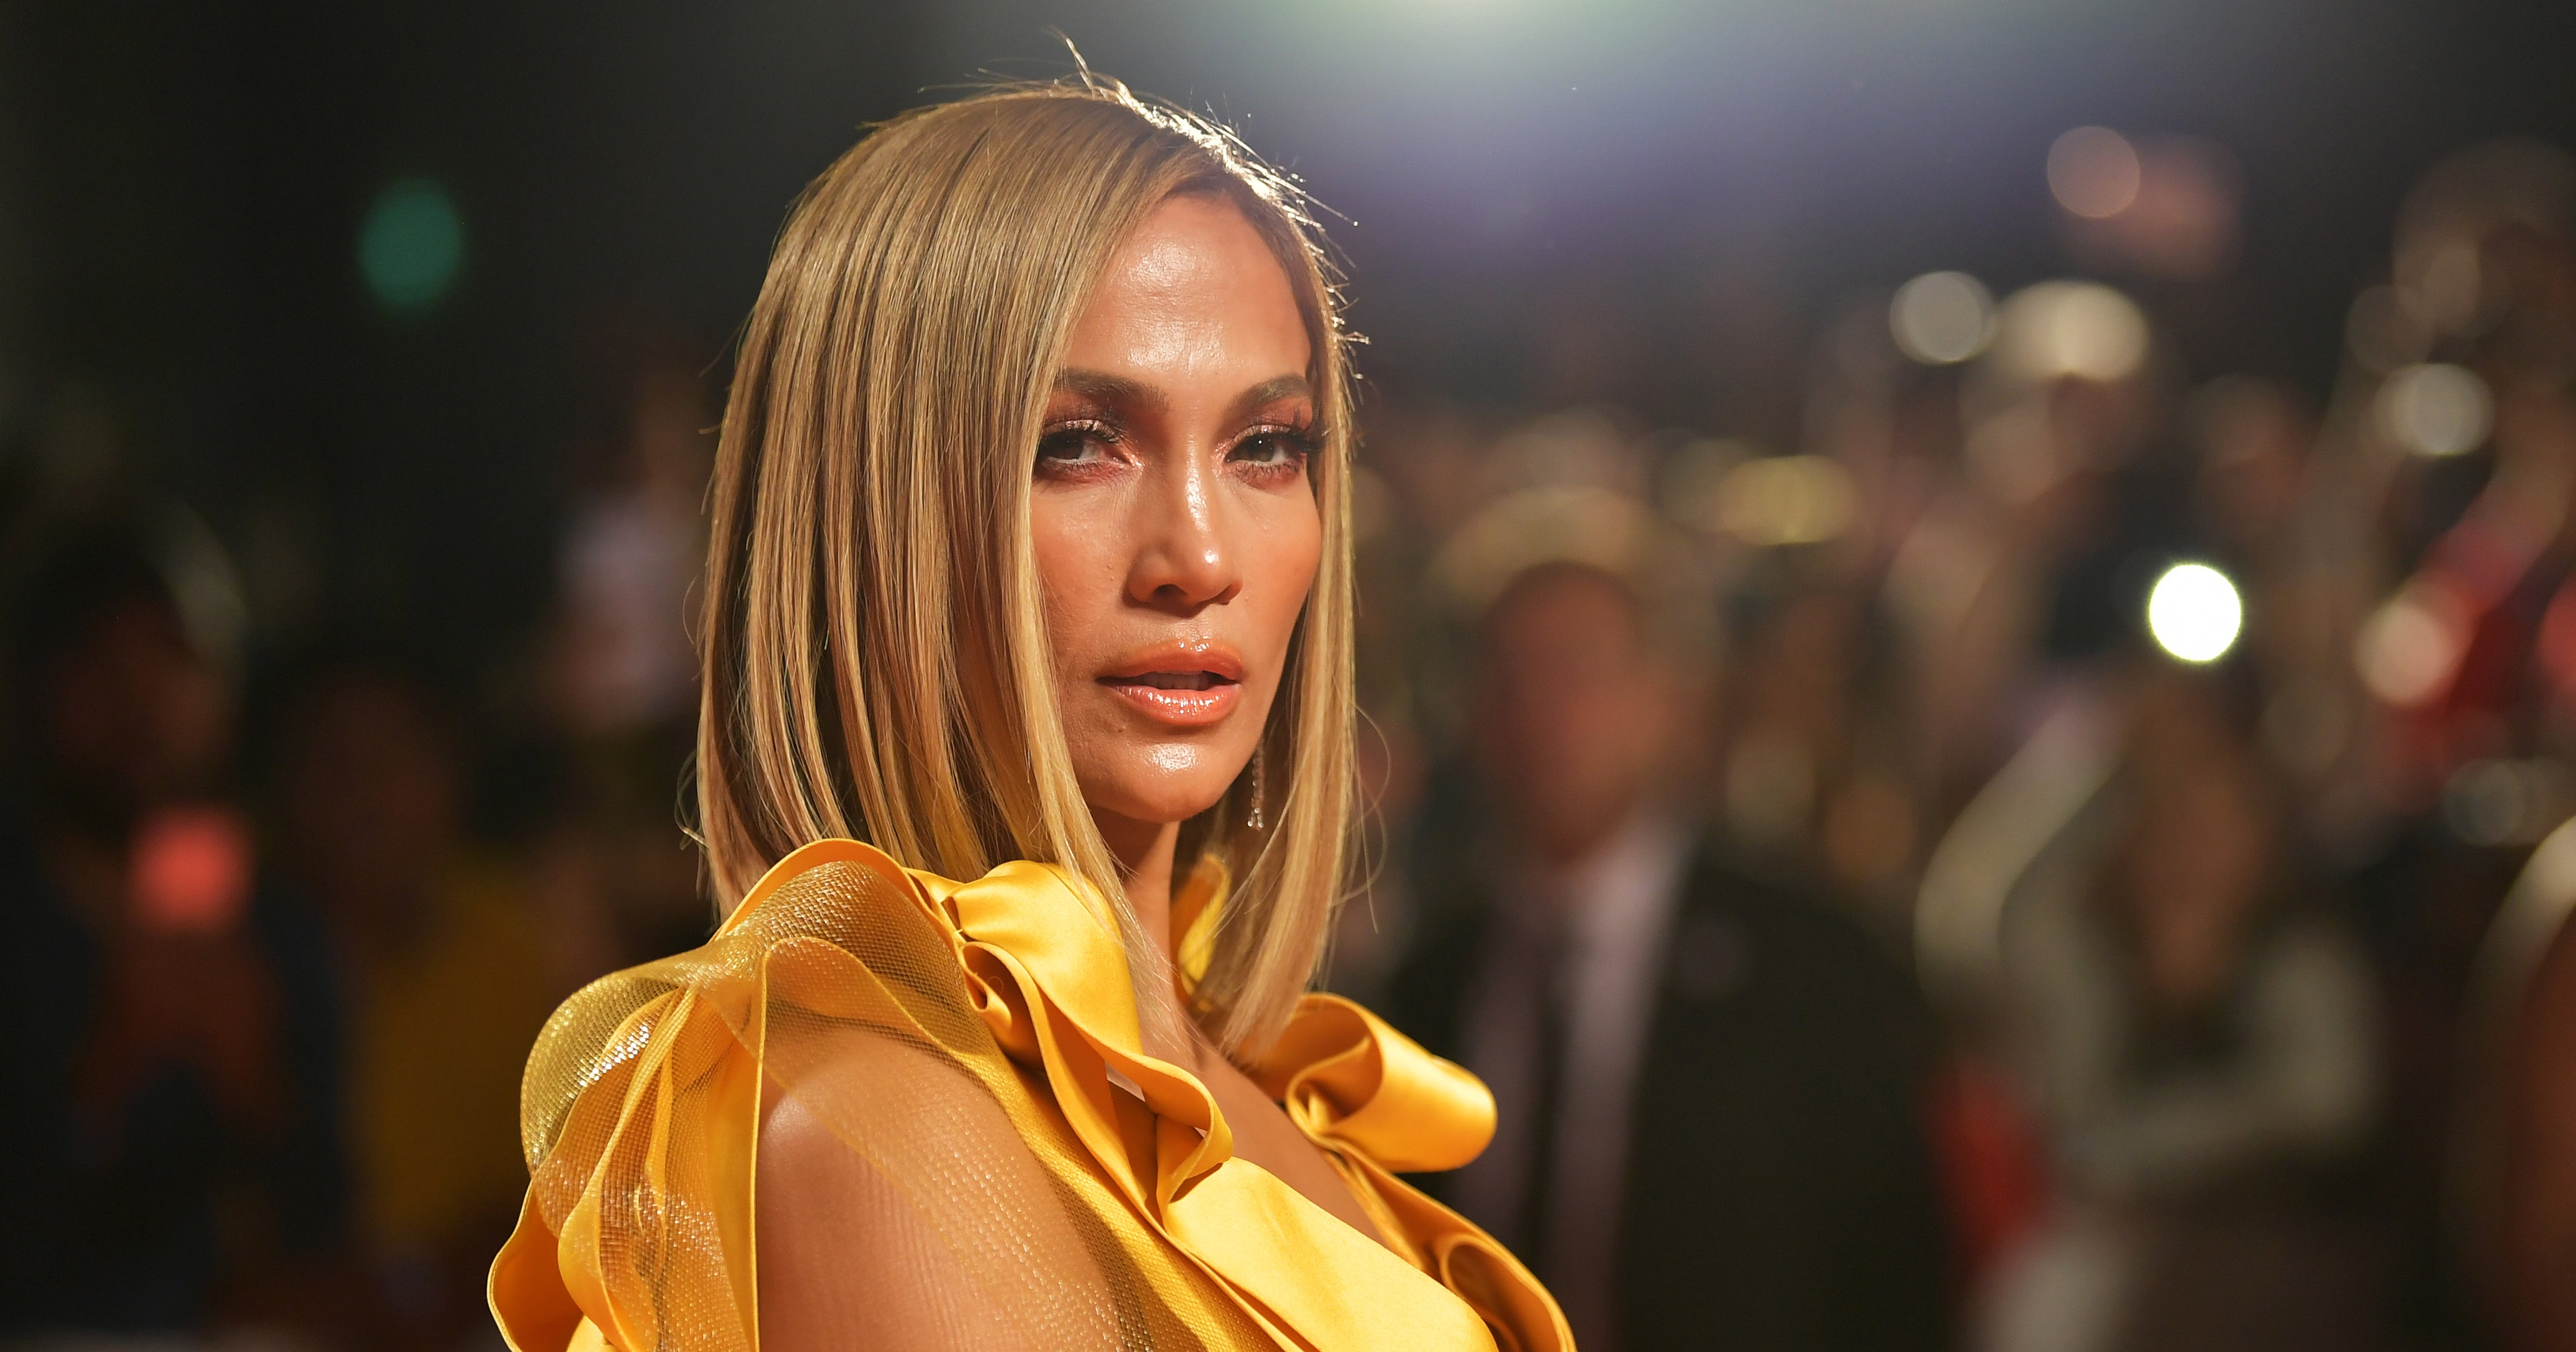 Jennifer Lopez Got Blonde Hair Extensions In New Photo